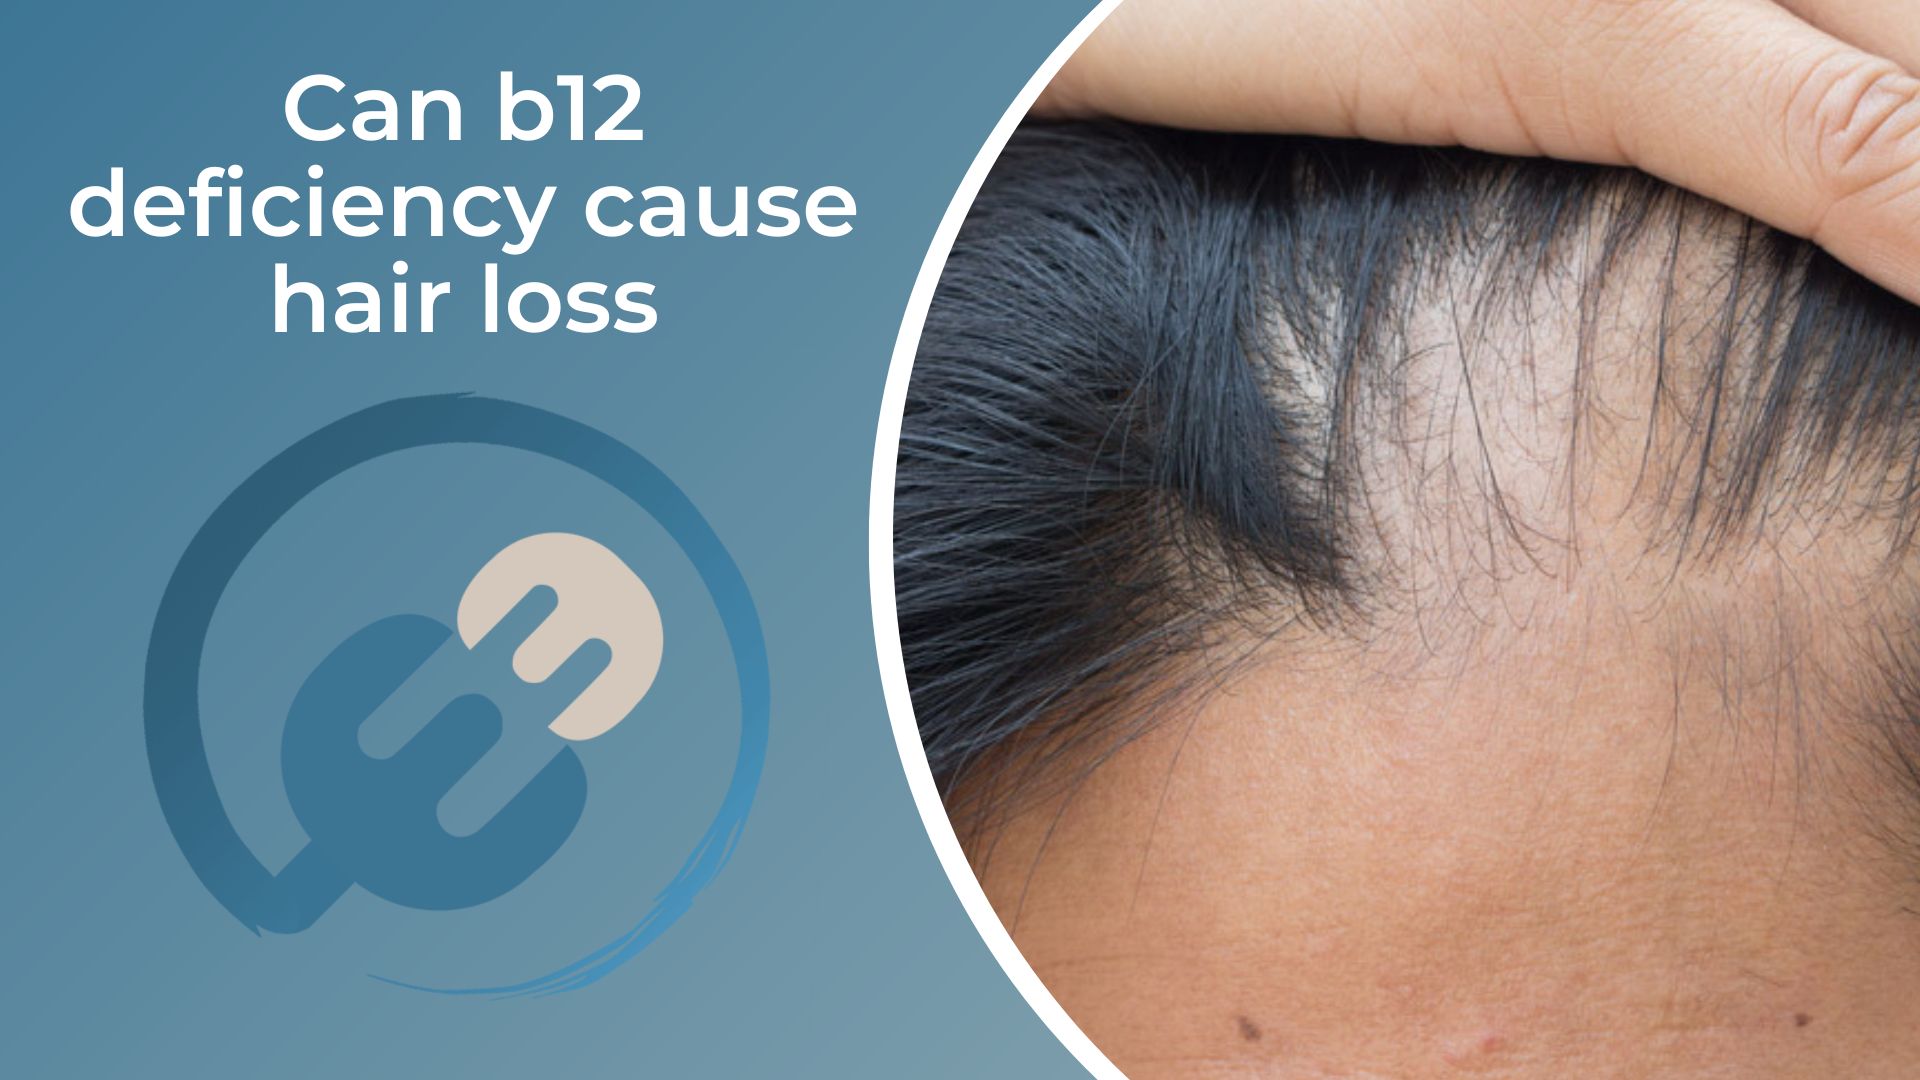 Can b12 deficiency cause hair loss